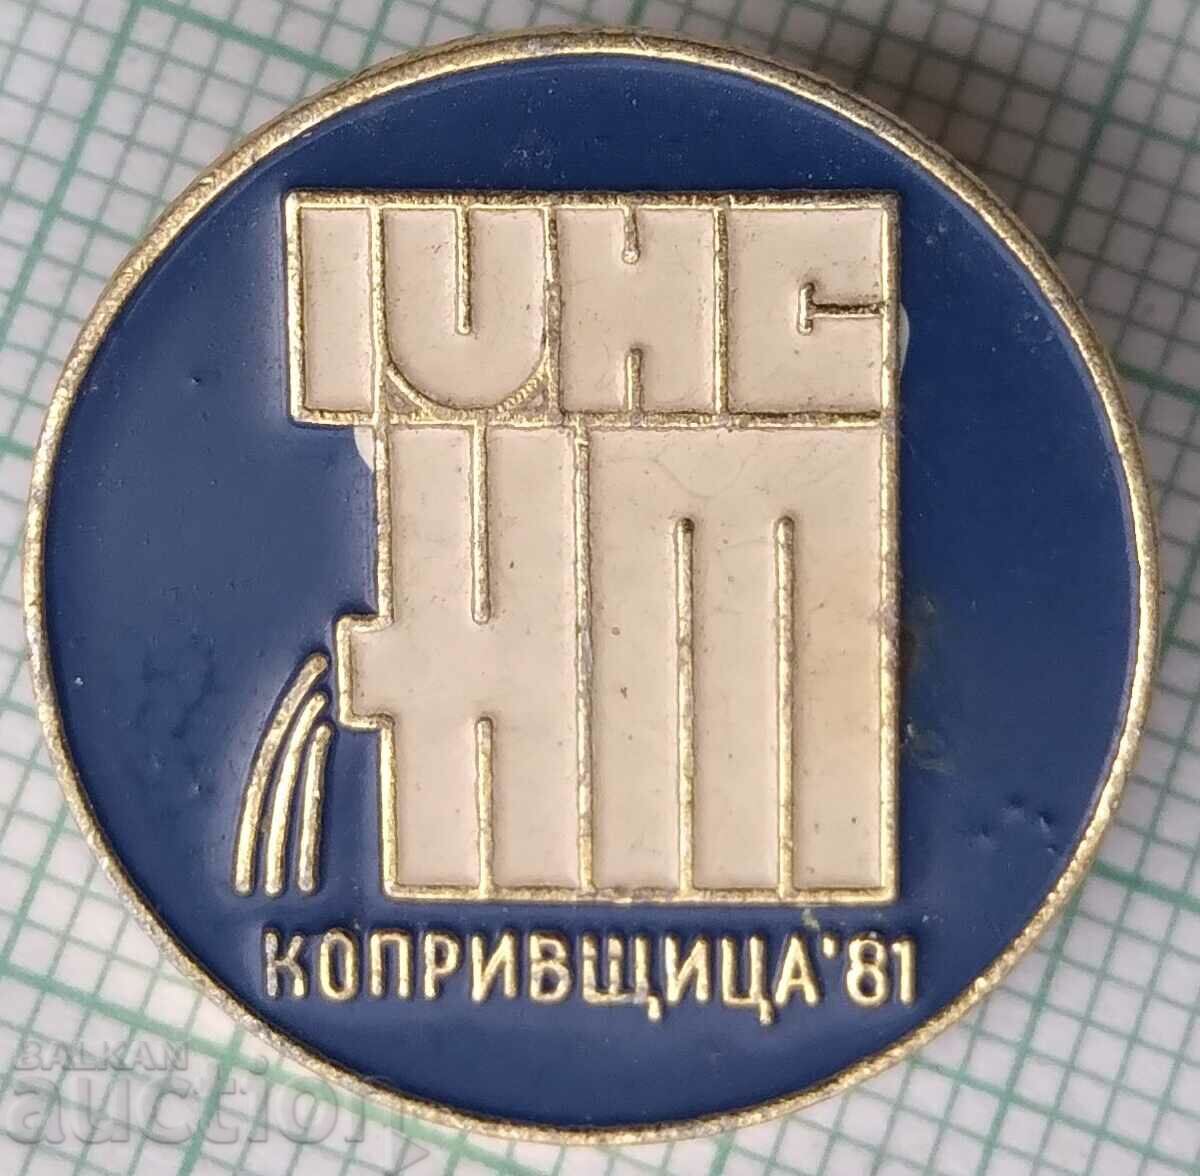 12600 Badge - KOPRIVSHTICA 1981 - IV NSNT - National Assembly